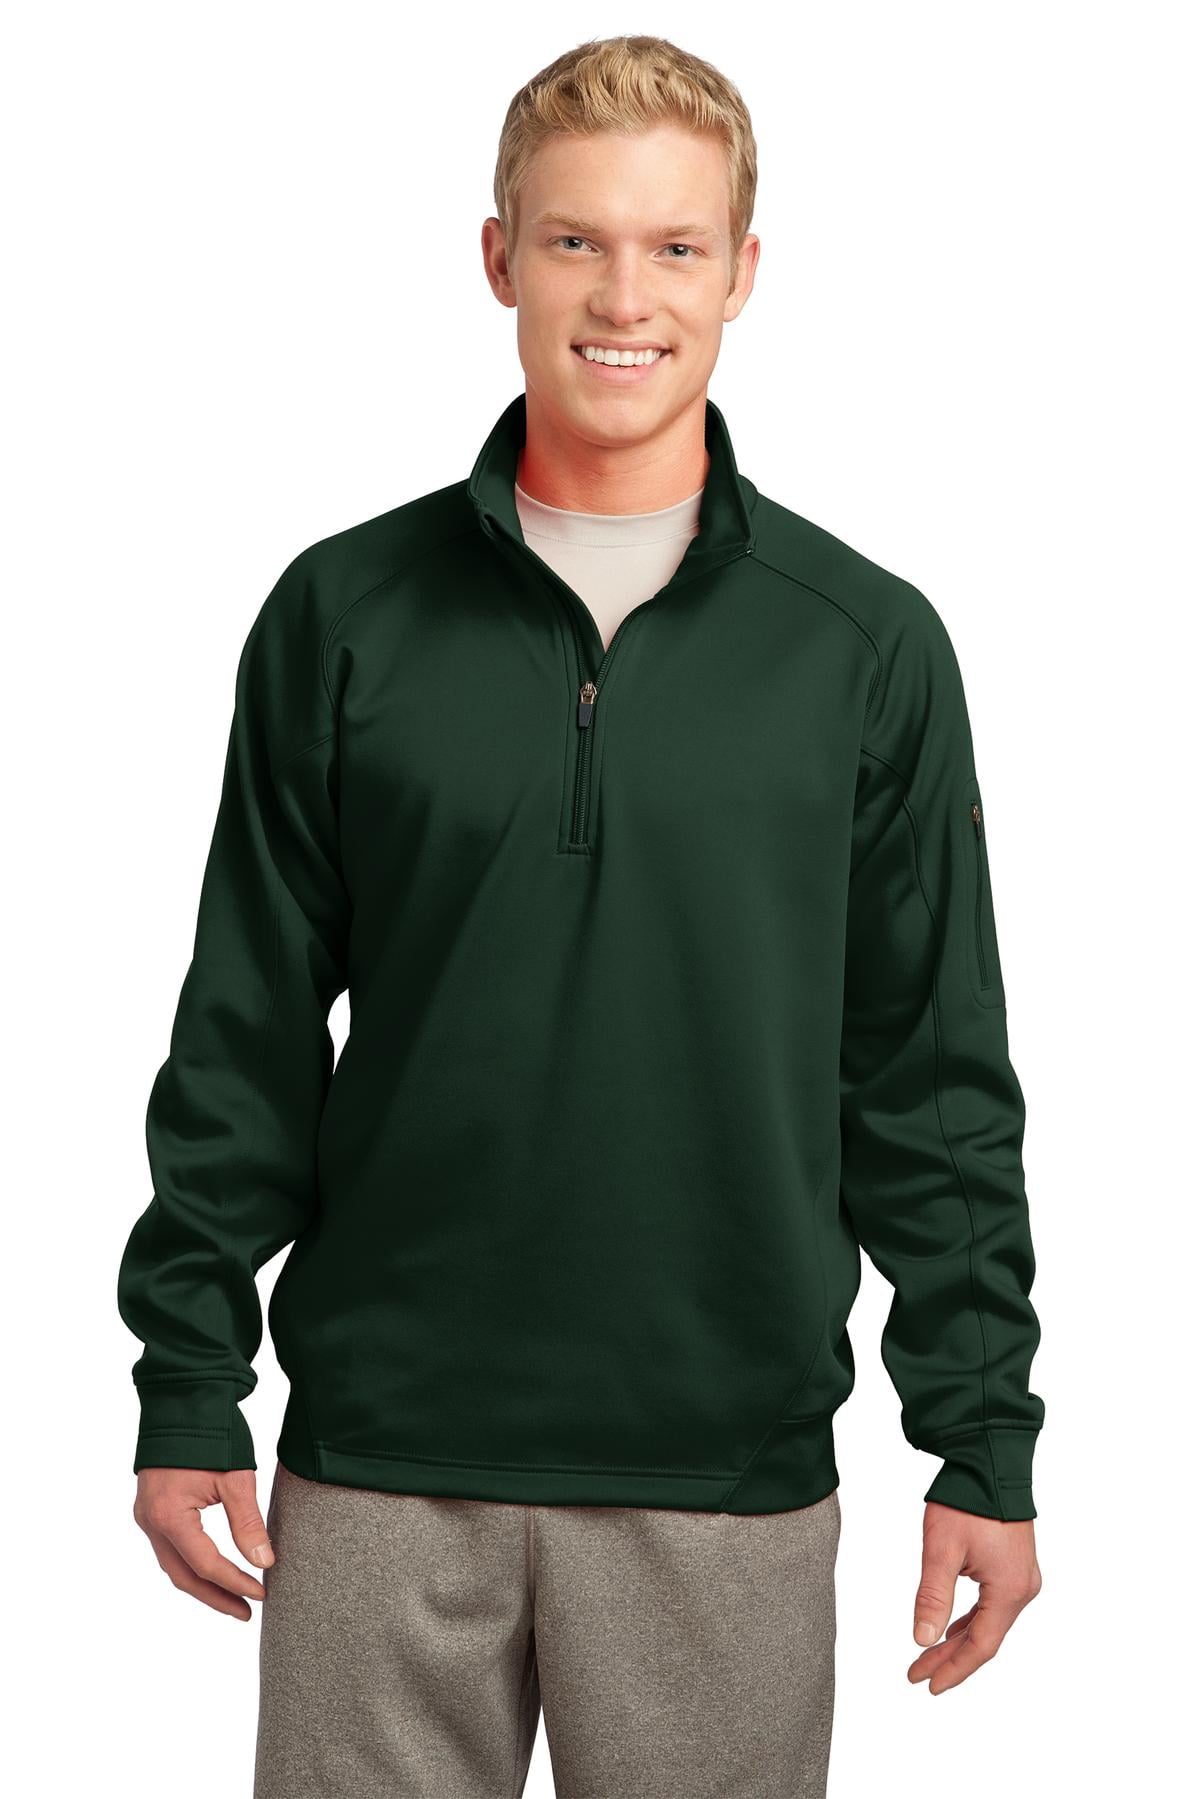 Tri-Mountain MenÃ¢â‚¬â„¢s Comfort 1 4 Zip Pullover Shirt - Walmart.com